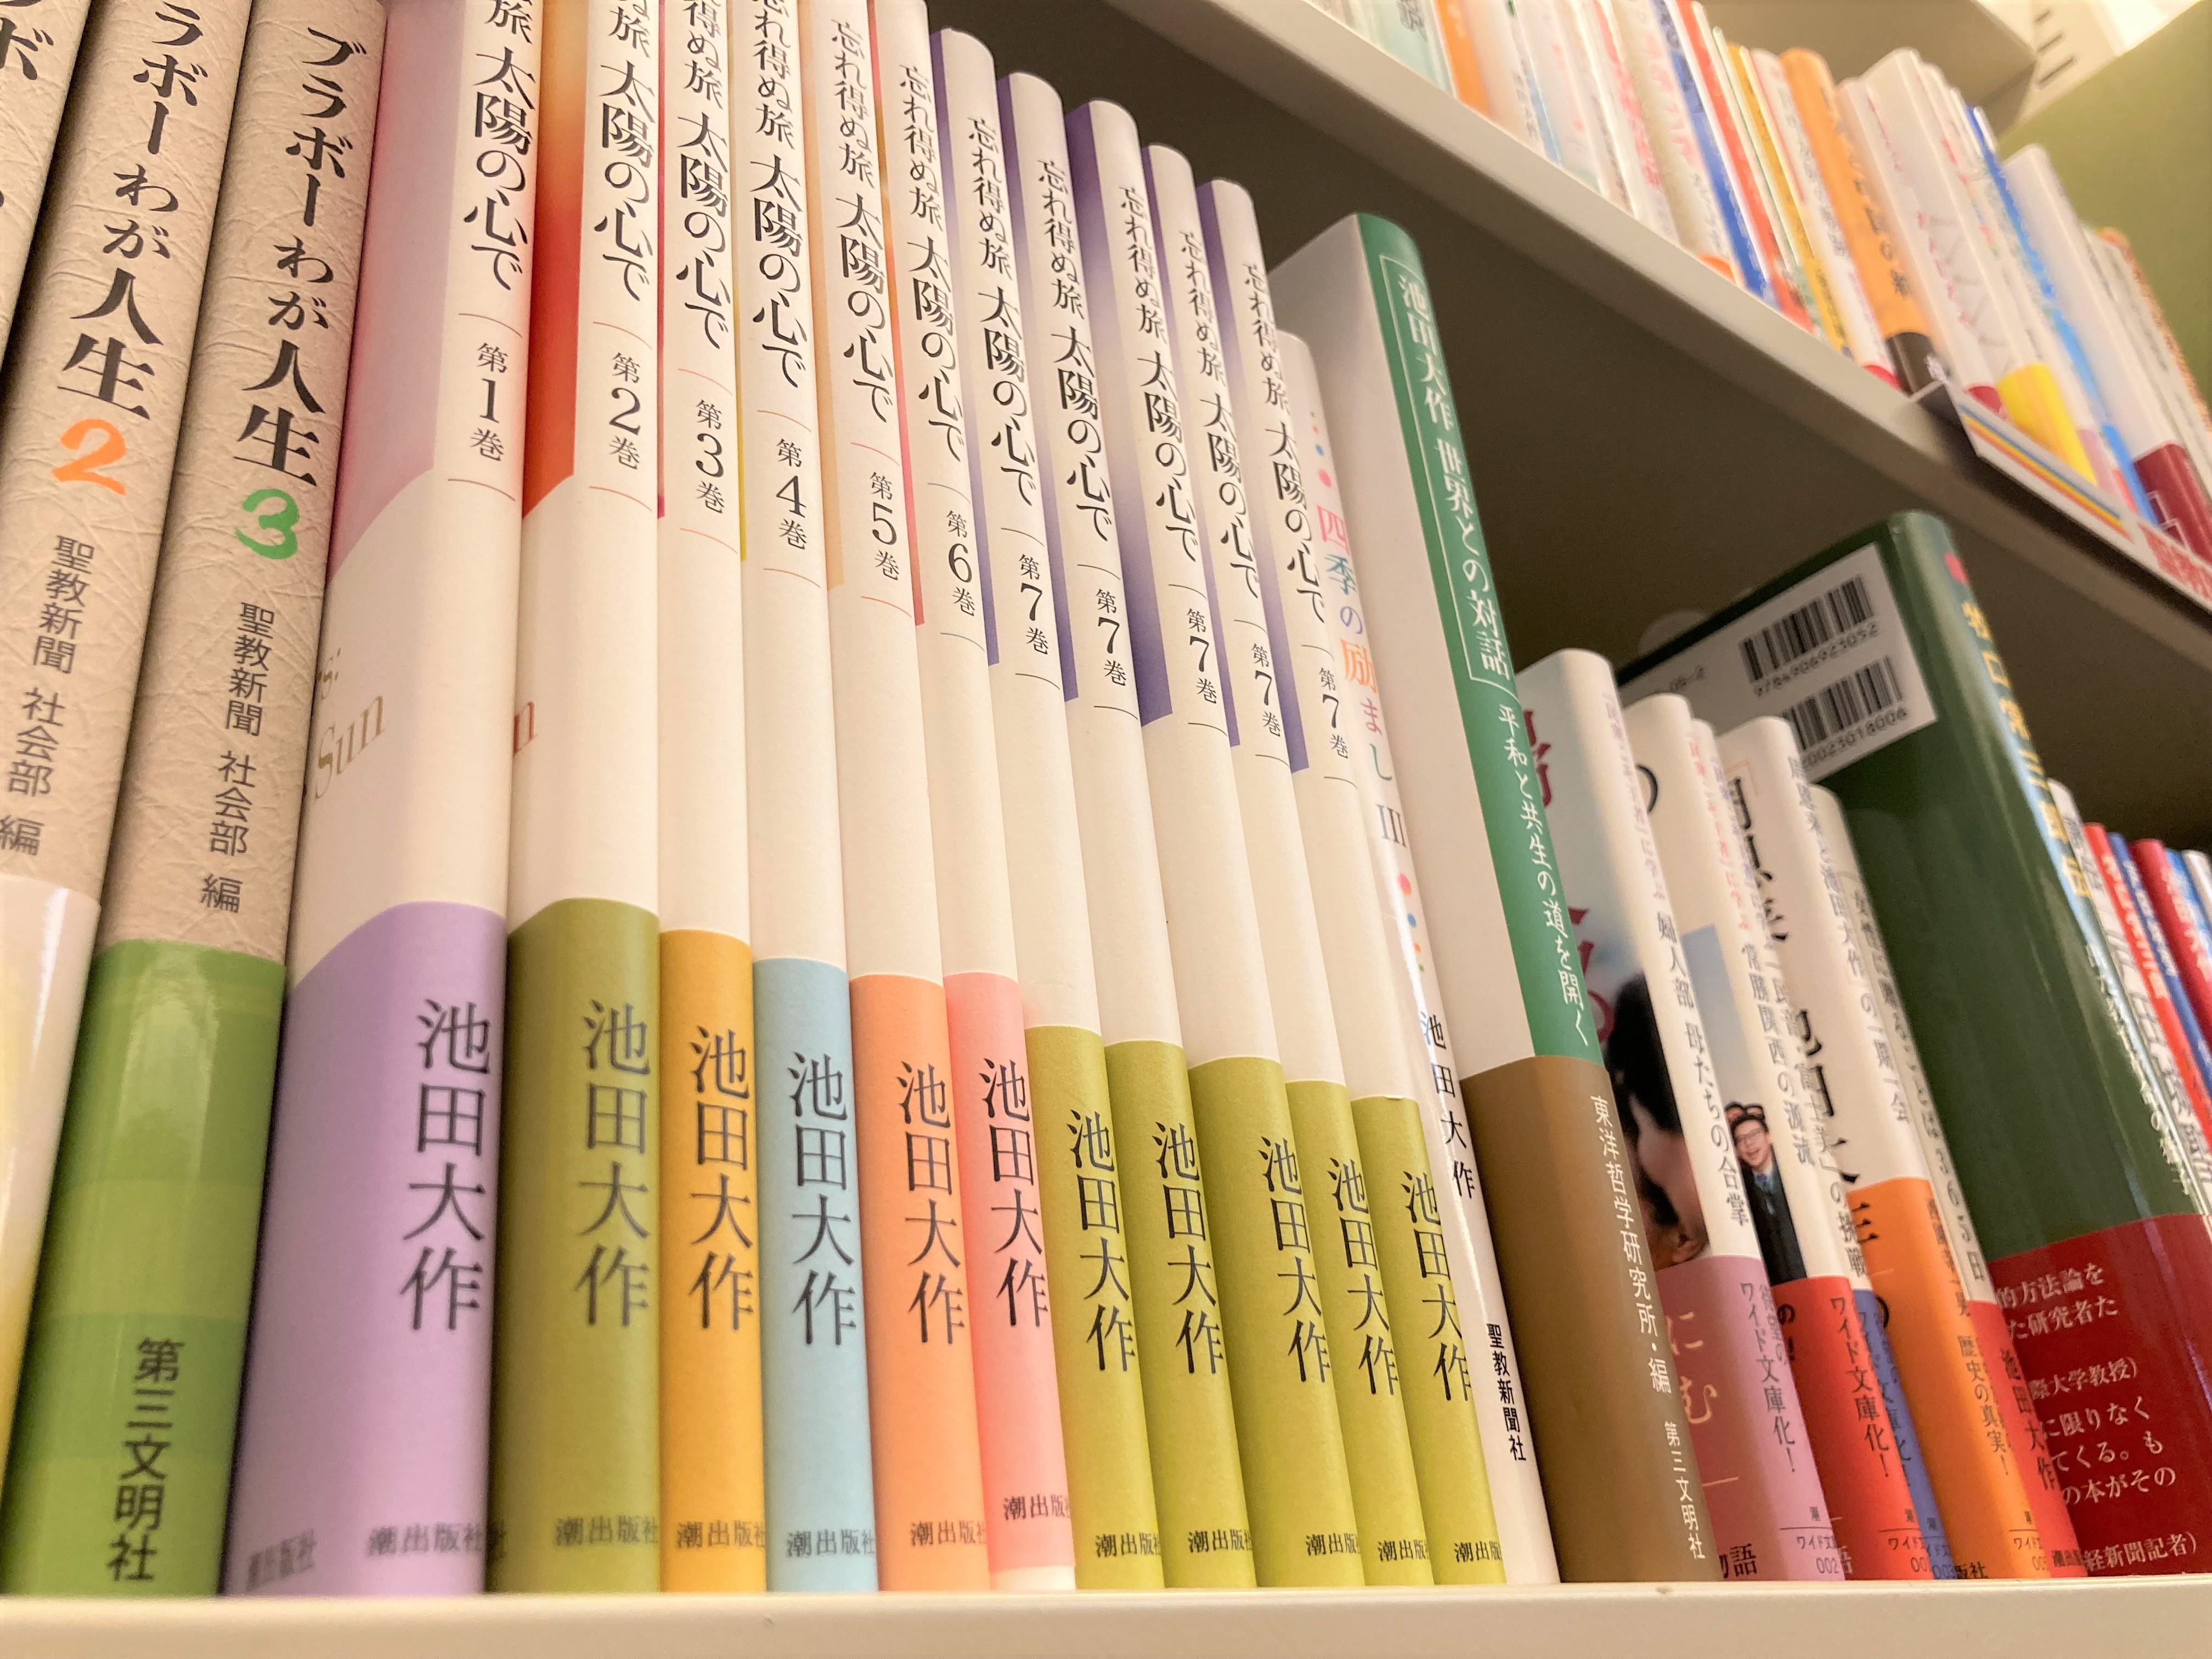 池田大作名誉会長の関連書籍の需要拡大見込む、特設コーナー設置の書店